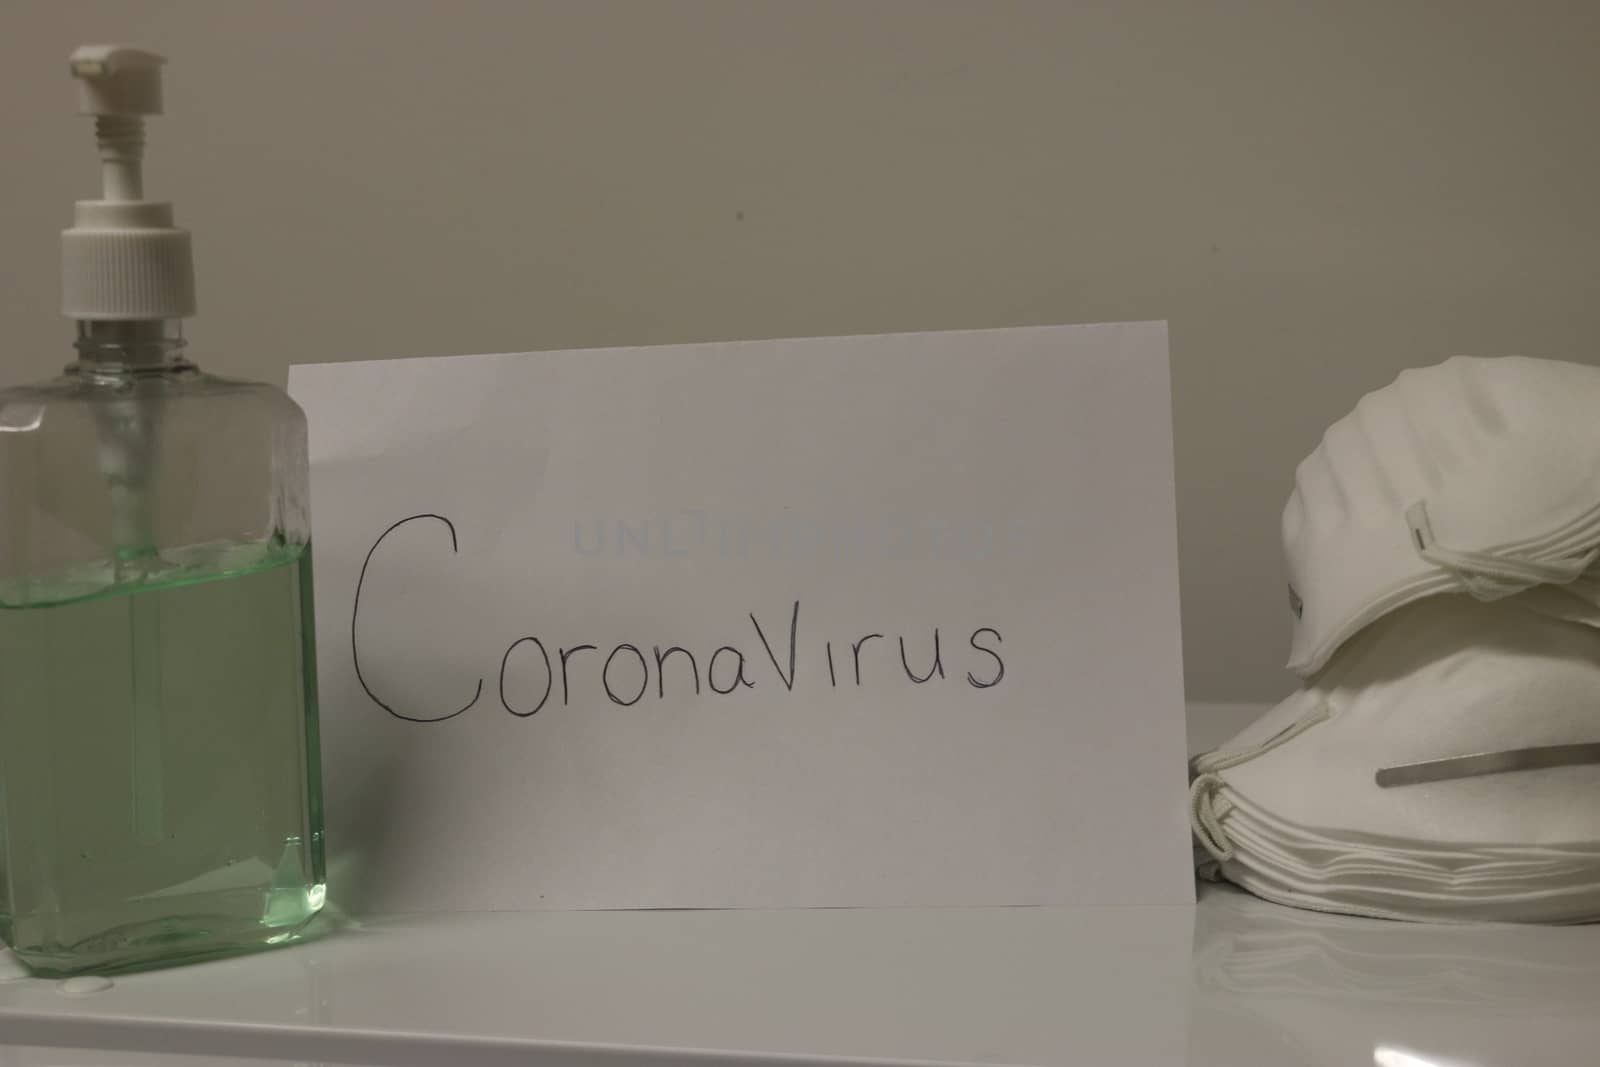 Coronavirus Hand Sanitizer Bottle Dispensing Rubbing Alcohol Gel For Hands Hygiene Health Care. by mynewturtle1